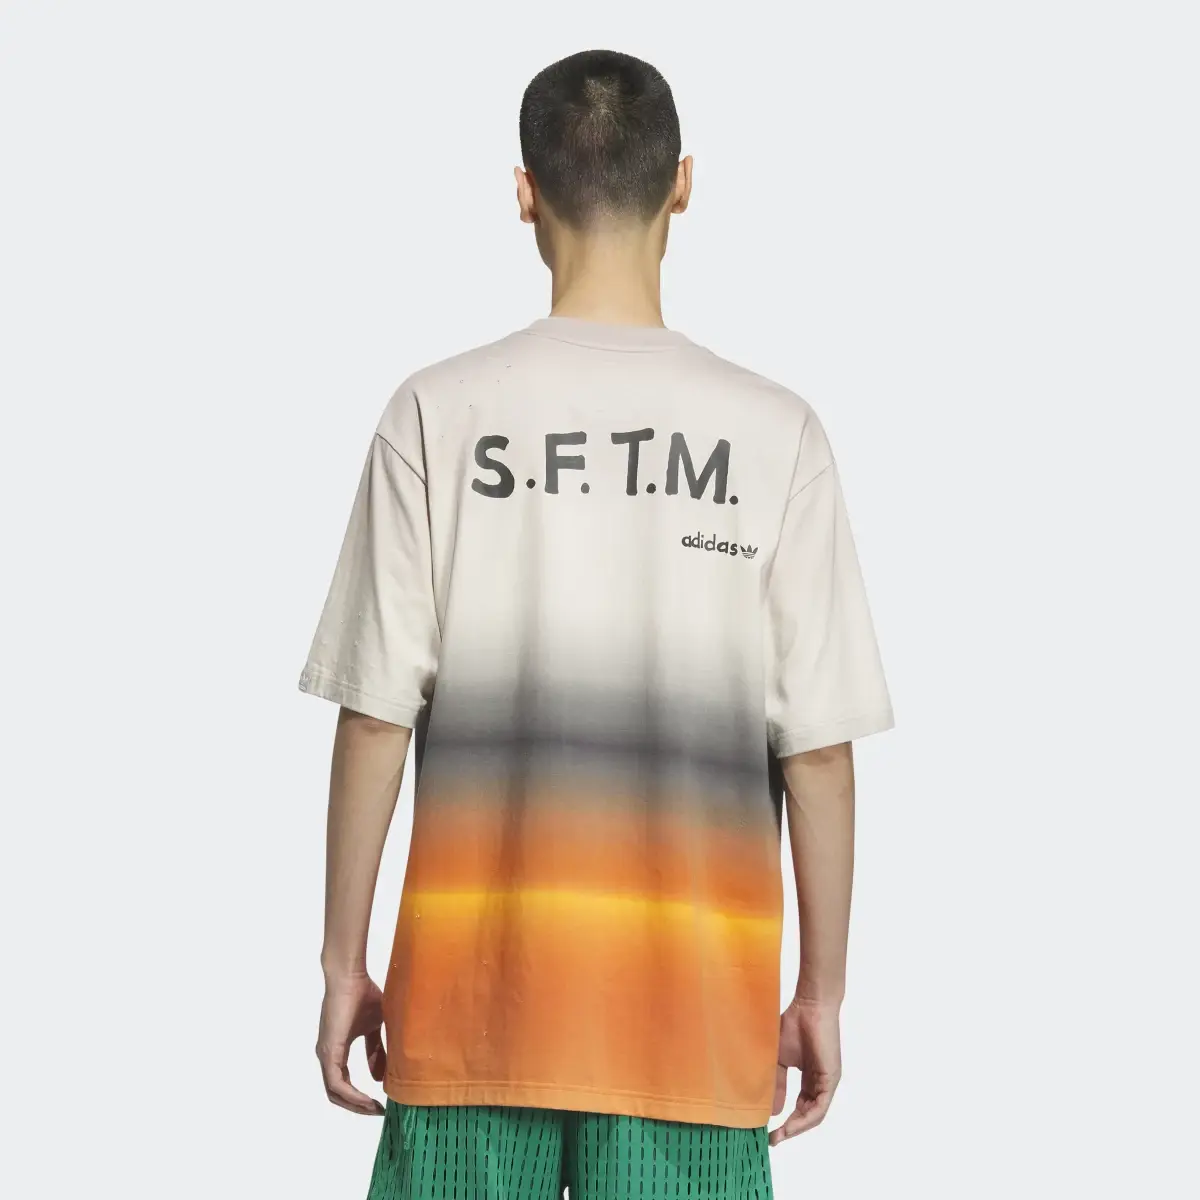 Adidas SFTM T-Shirt (Gender Neutral). 3